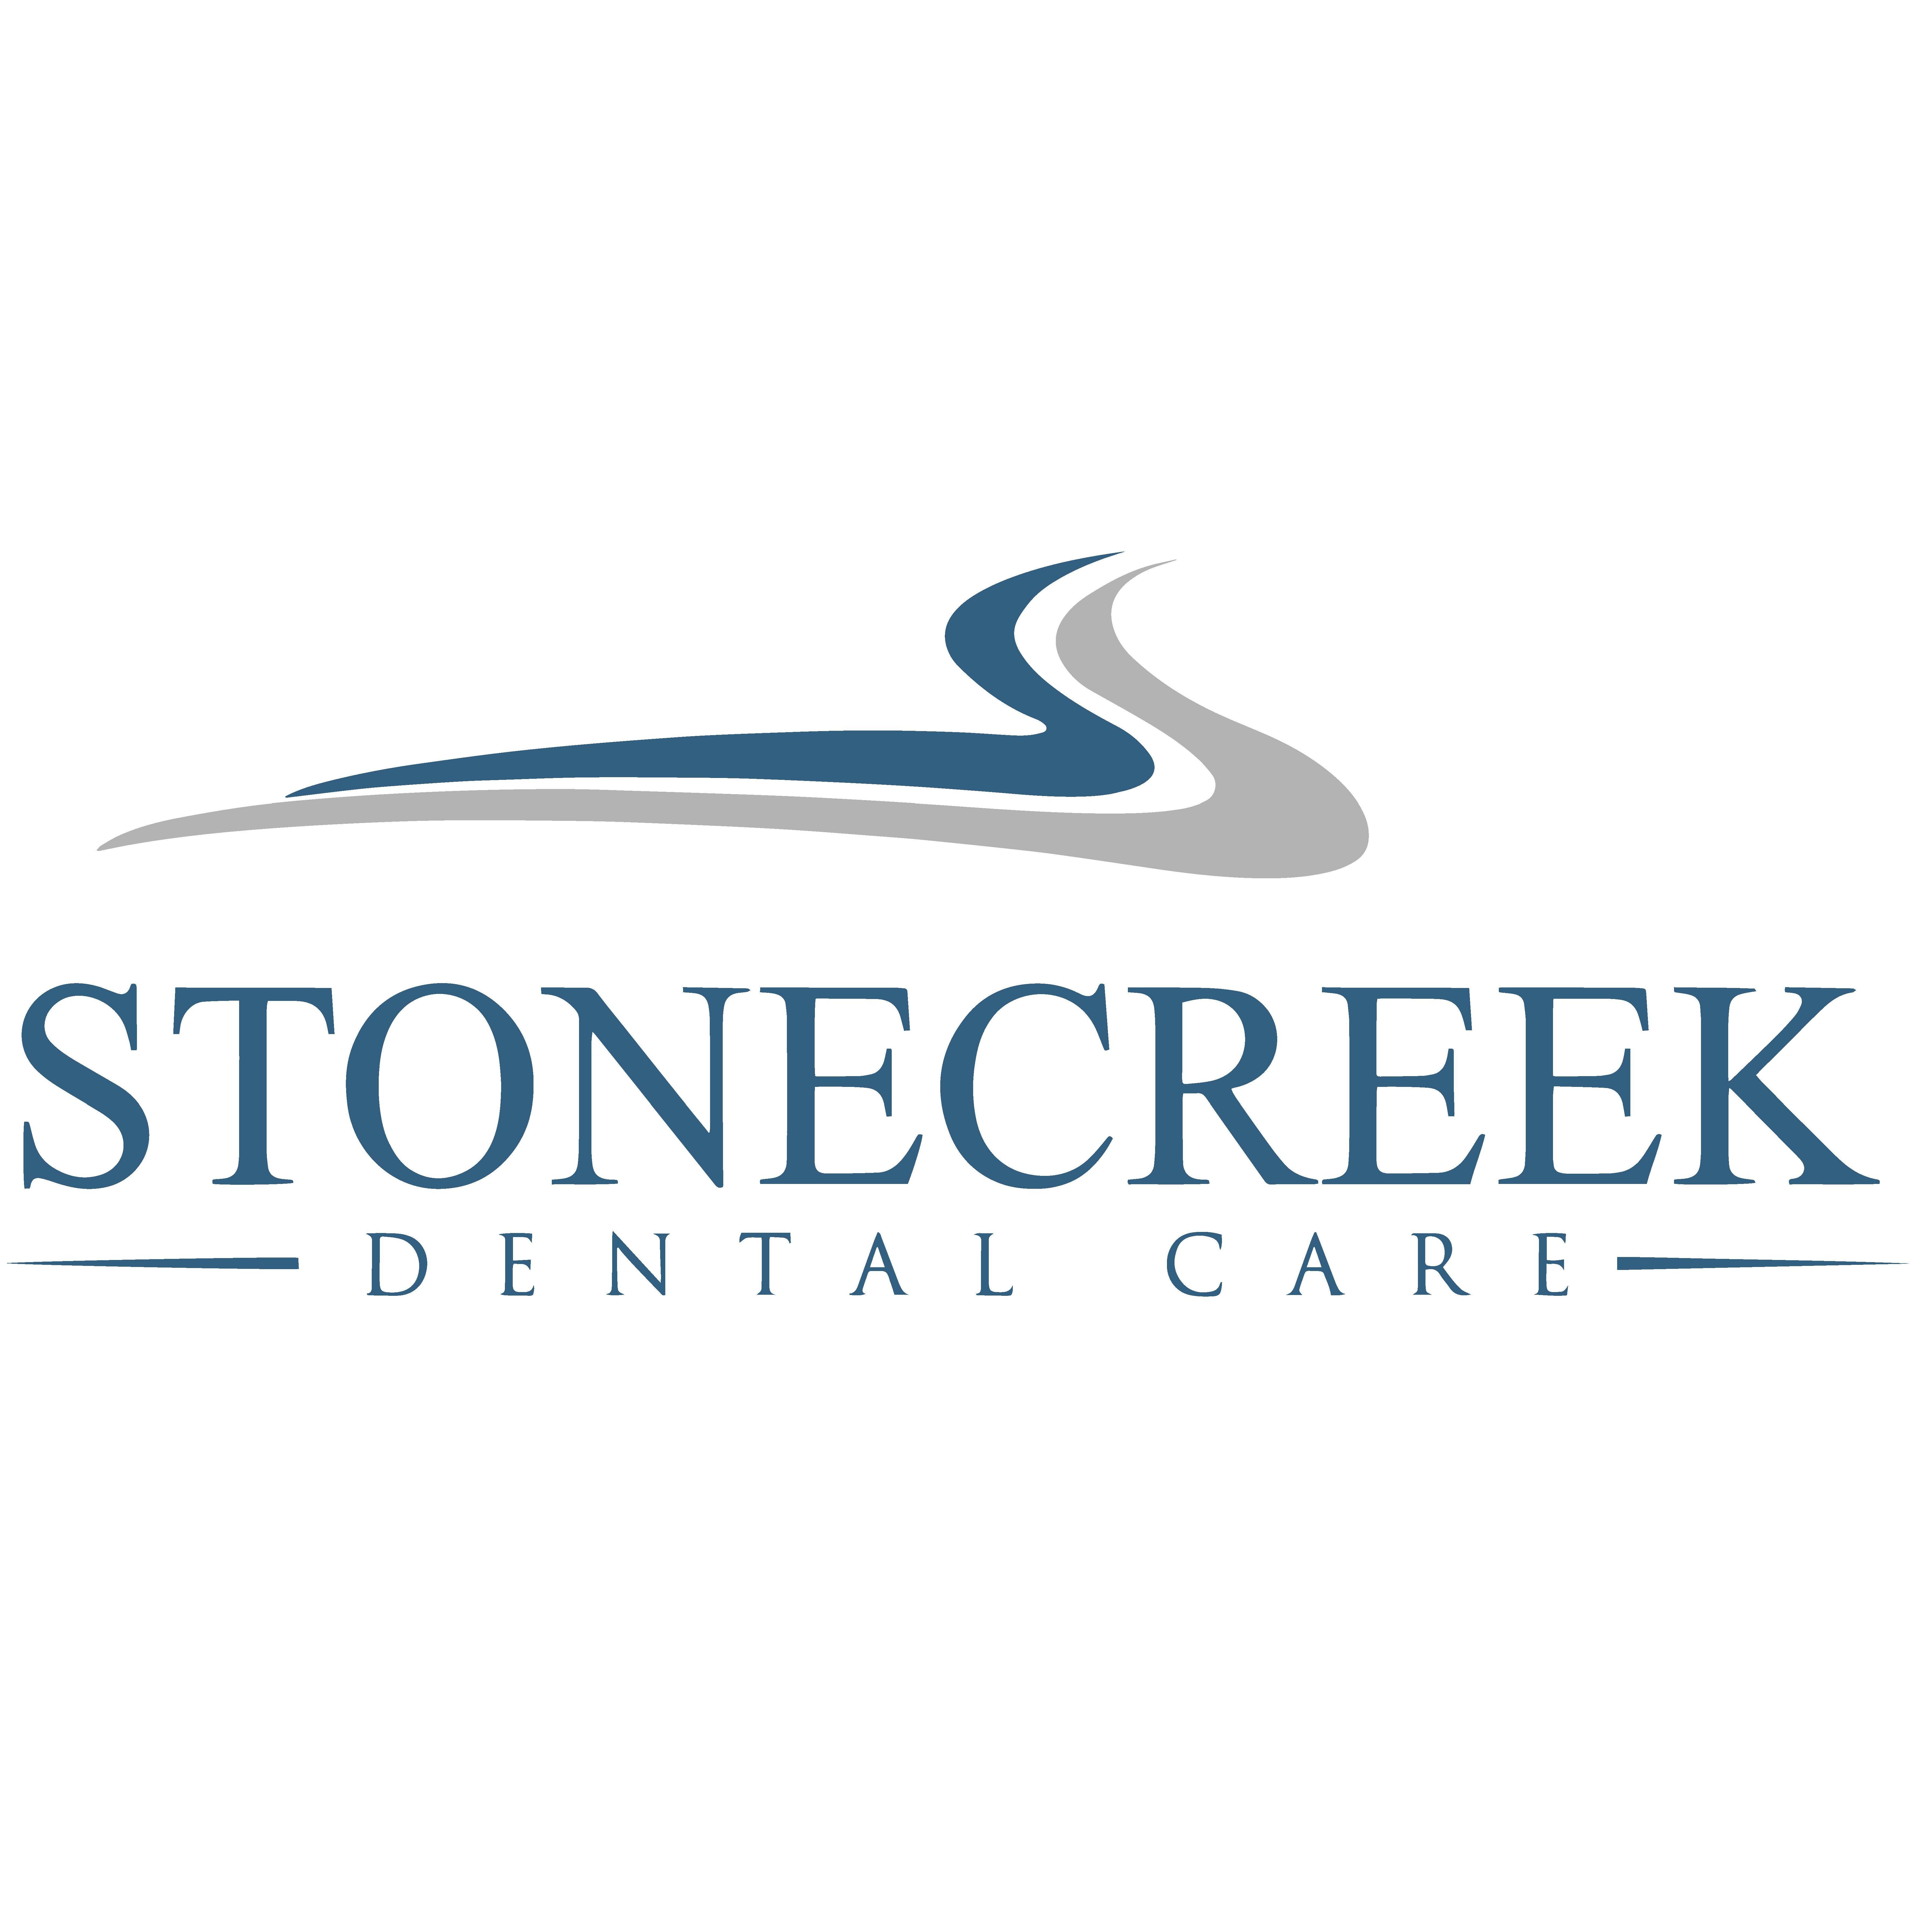 Stonecreek Dental